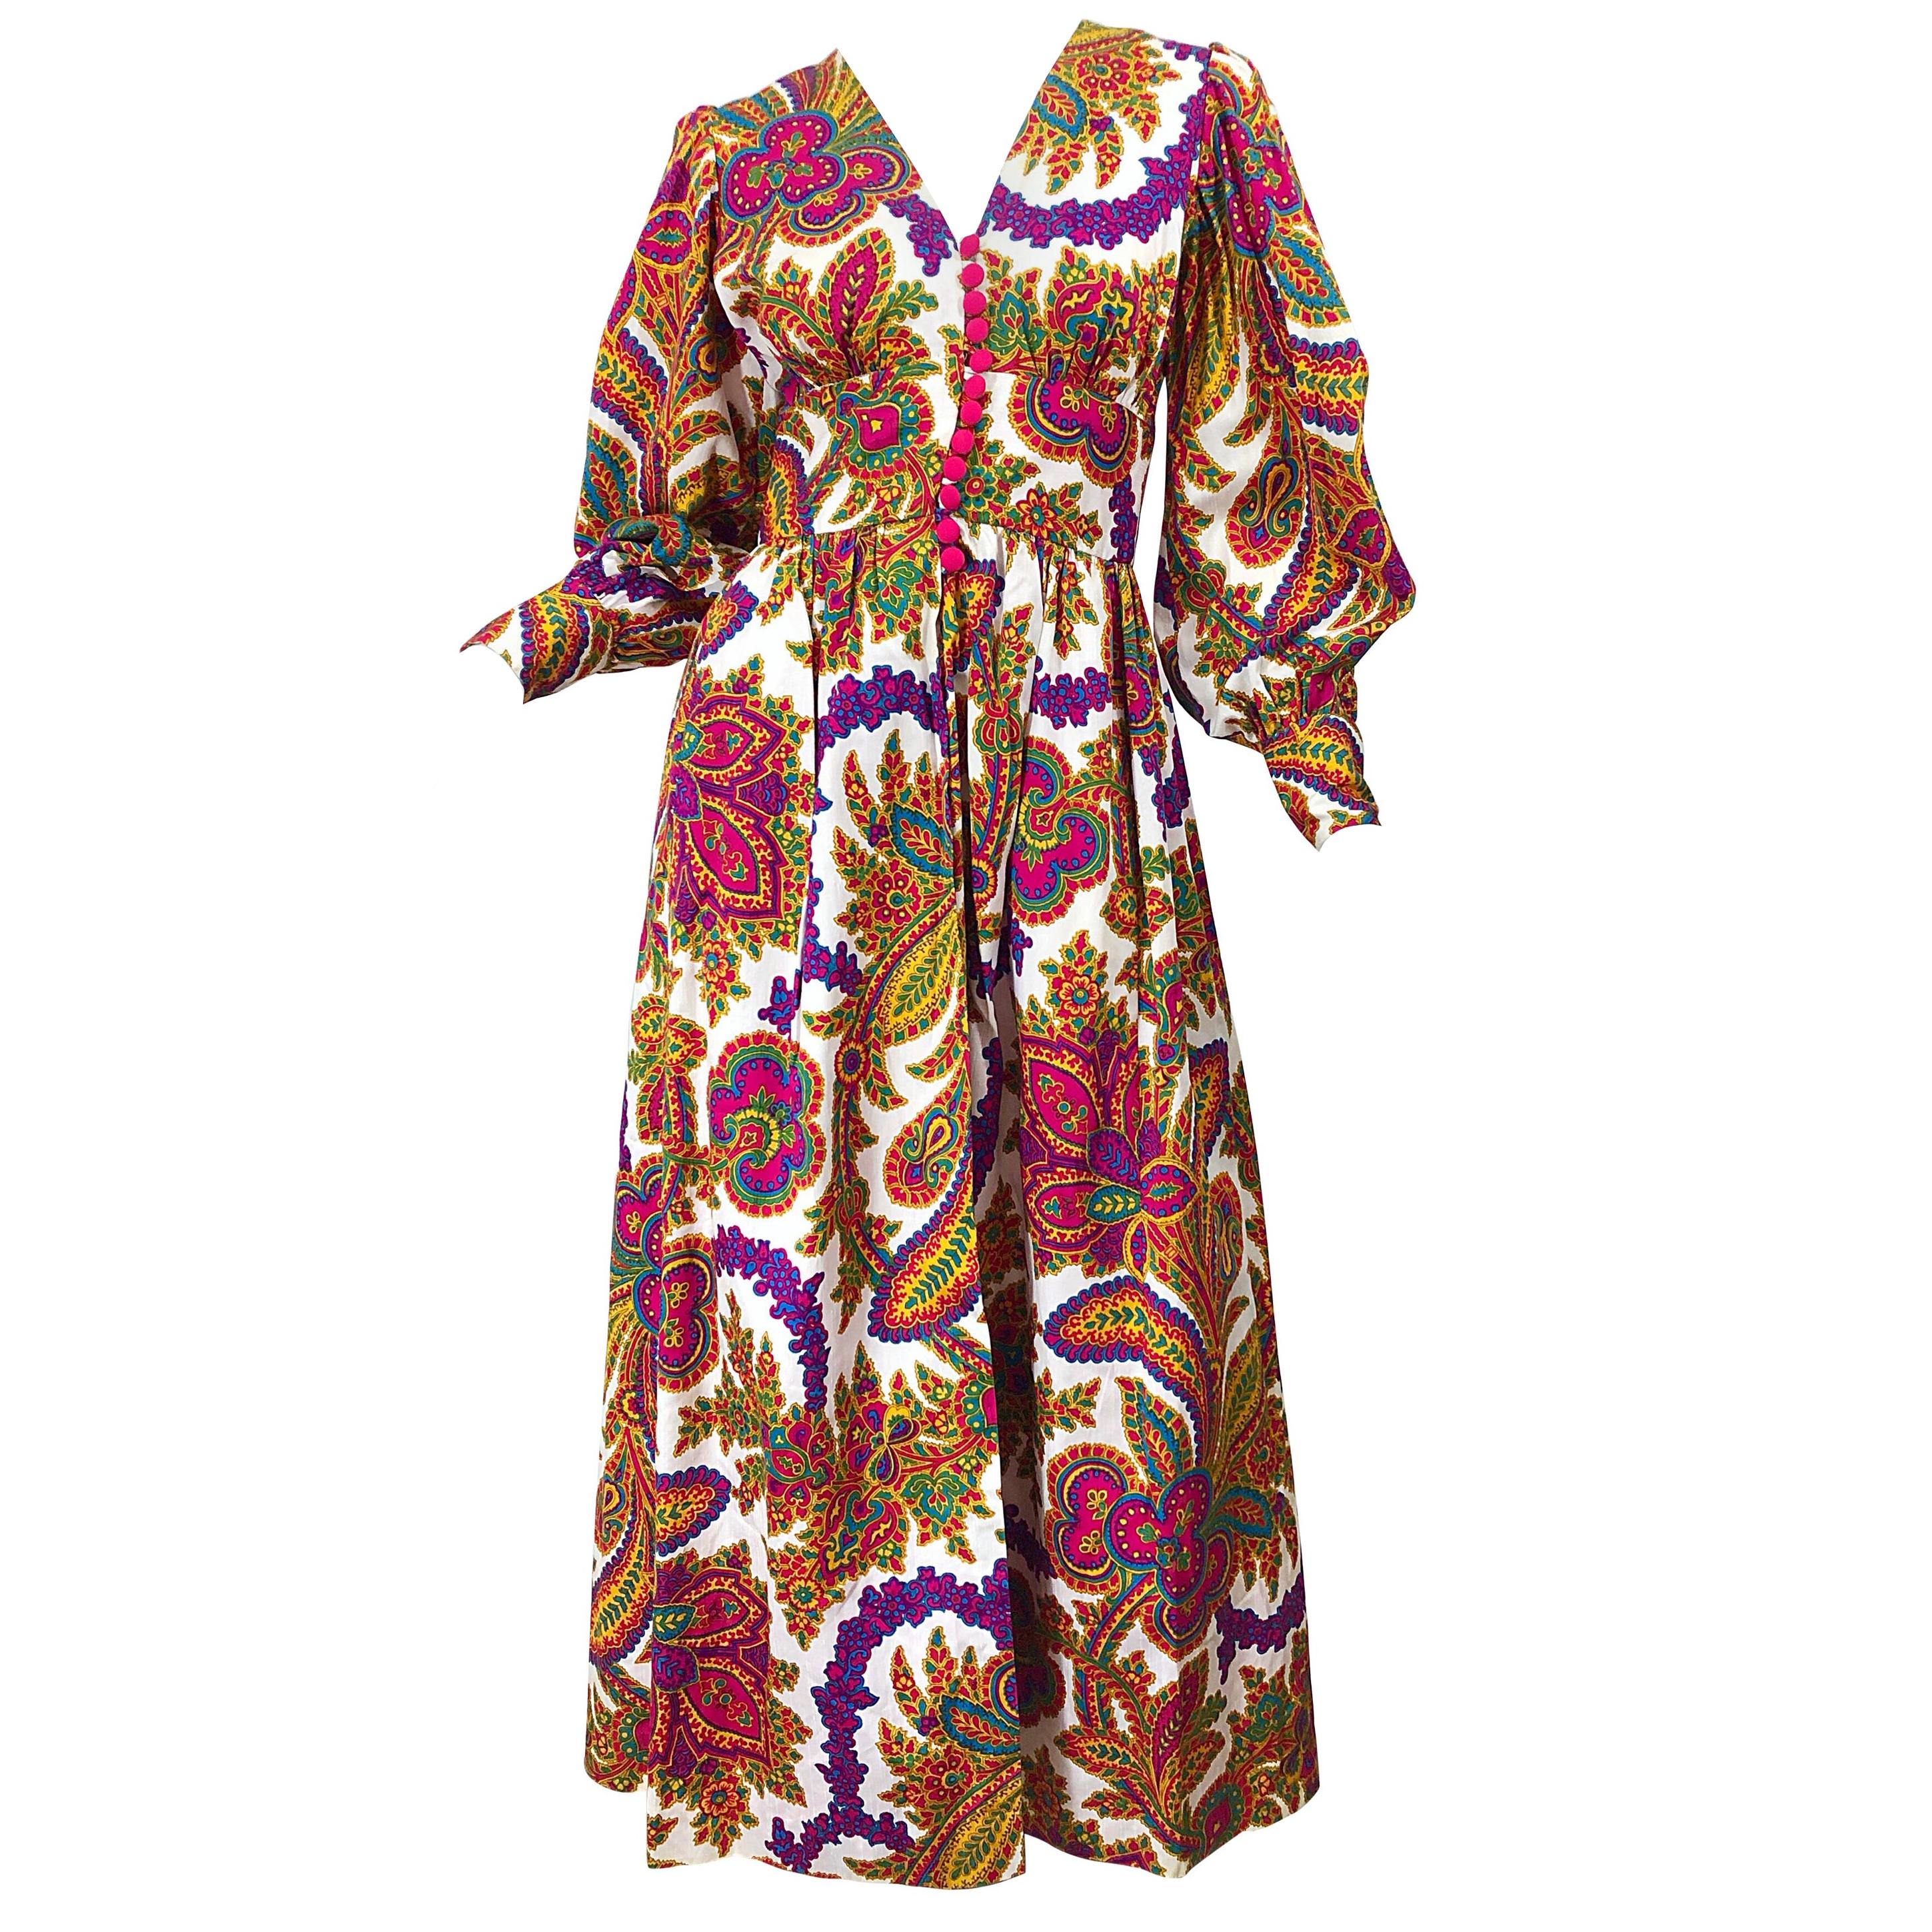 Amazing 1970s Regal Paisley Boho Chic Colorful Vintage 70s Silk Gown Maxi Dress